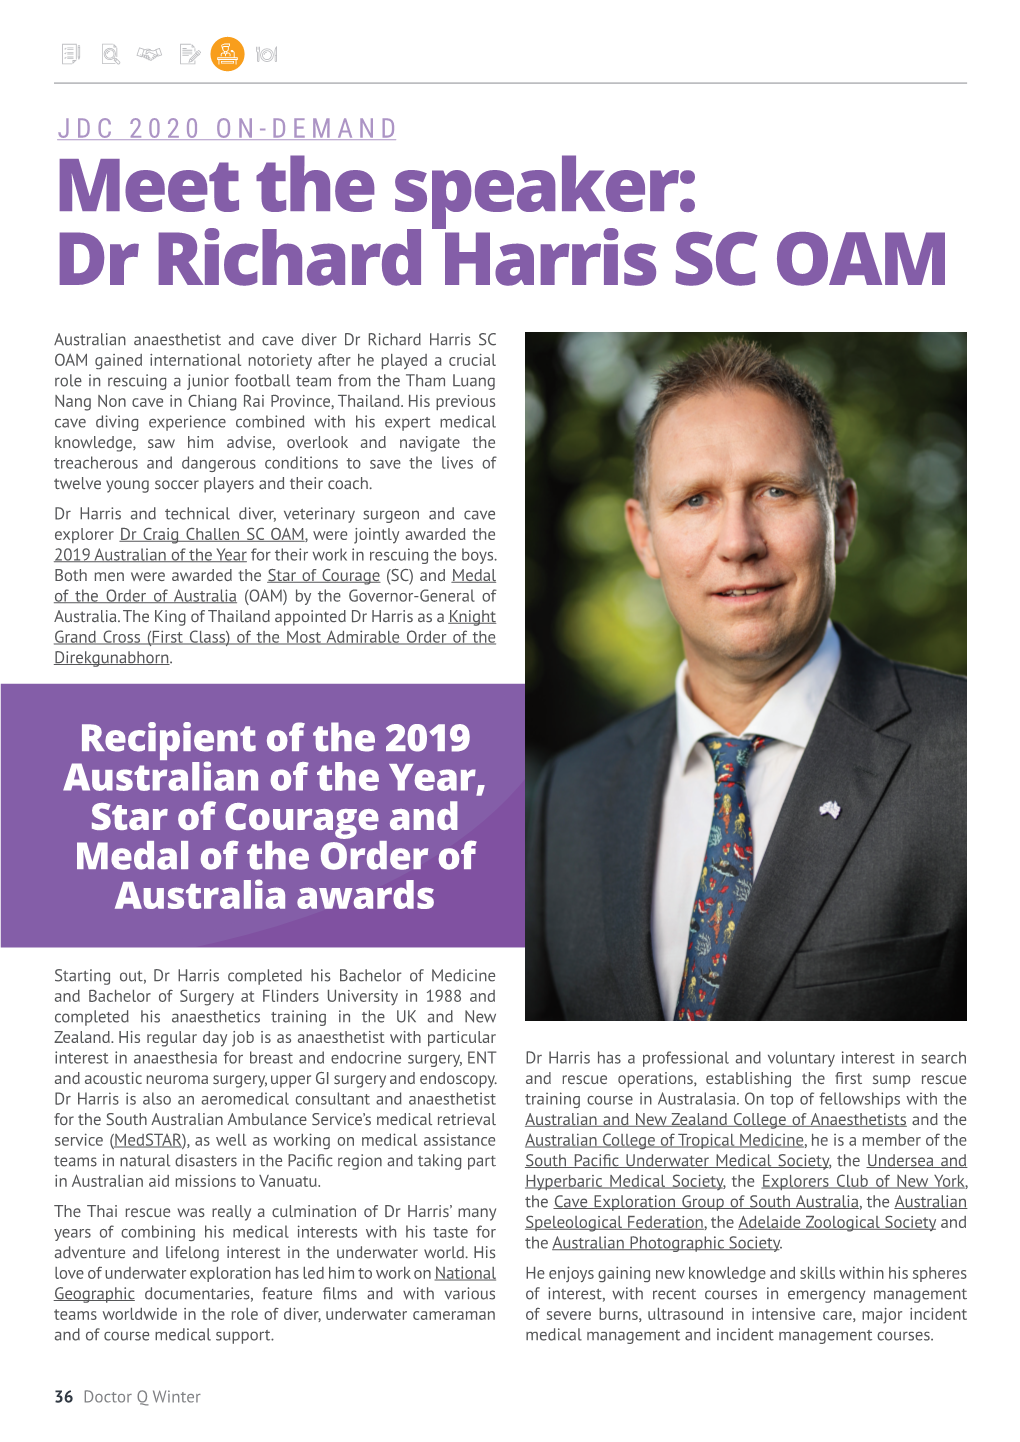 Dr Richard Harris SC OAM